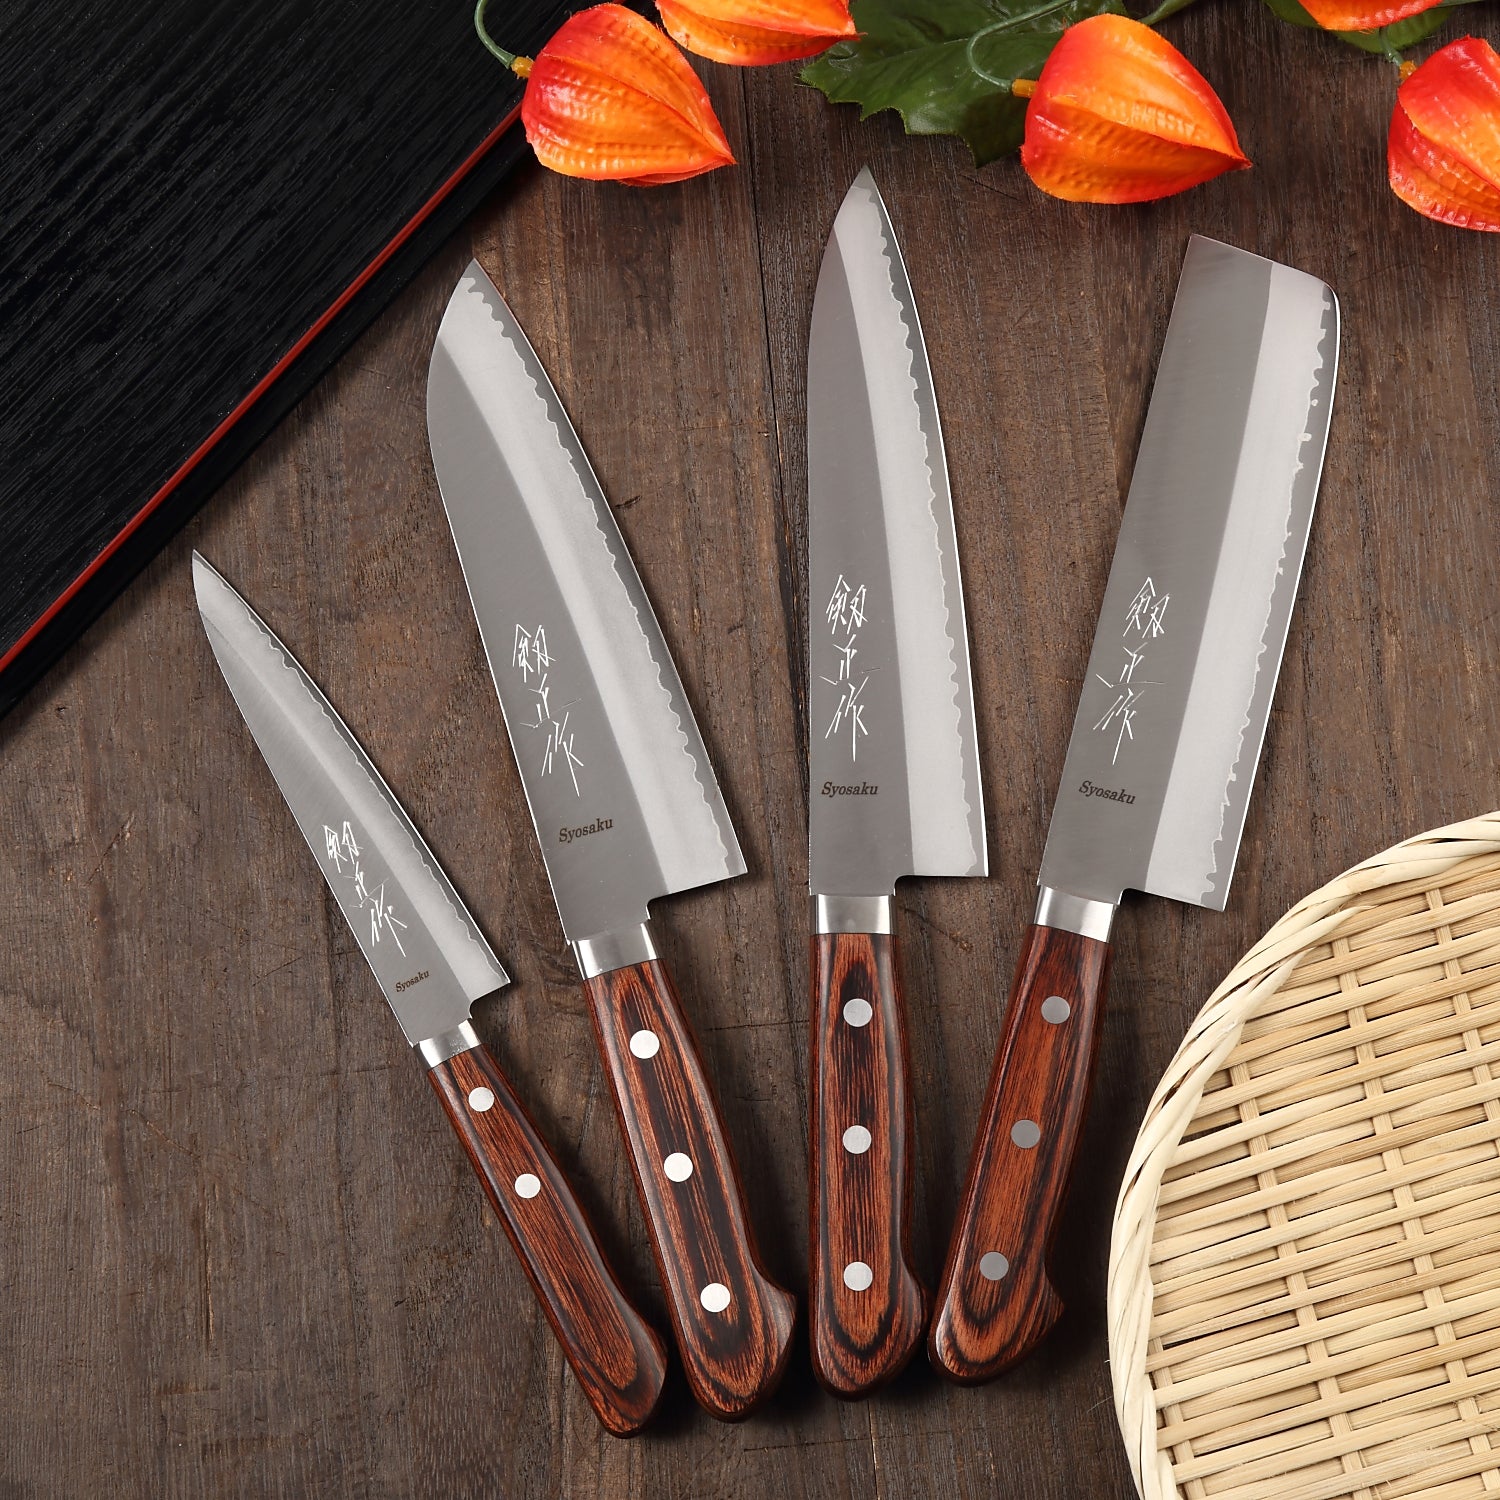 Syosaku Japanese Multi Purpose Best Sharp Kitchen Chef Knife VG-1 Gold Stainless Steel Mahogany Handle, Santoku 6.5-inch (165mm) with Magnolia Sheath